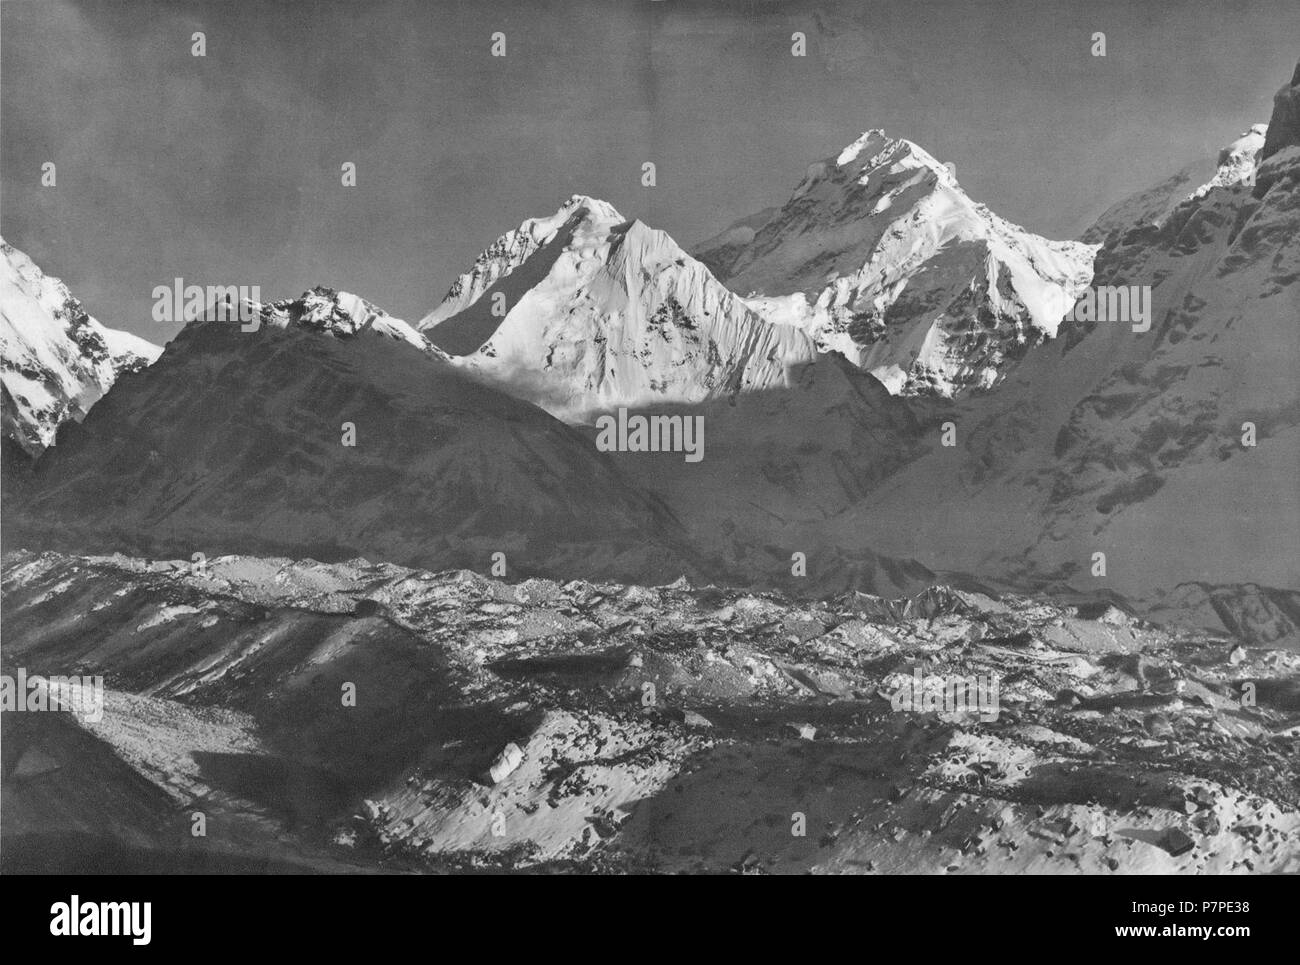 34-35 plancheXXXIV - XXXV. Contreforts occidentaux du Kangchenjunga (8603 m); Foto de Vittorio Sella Stockfoto